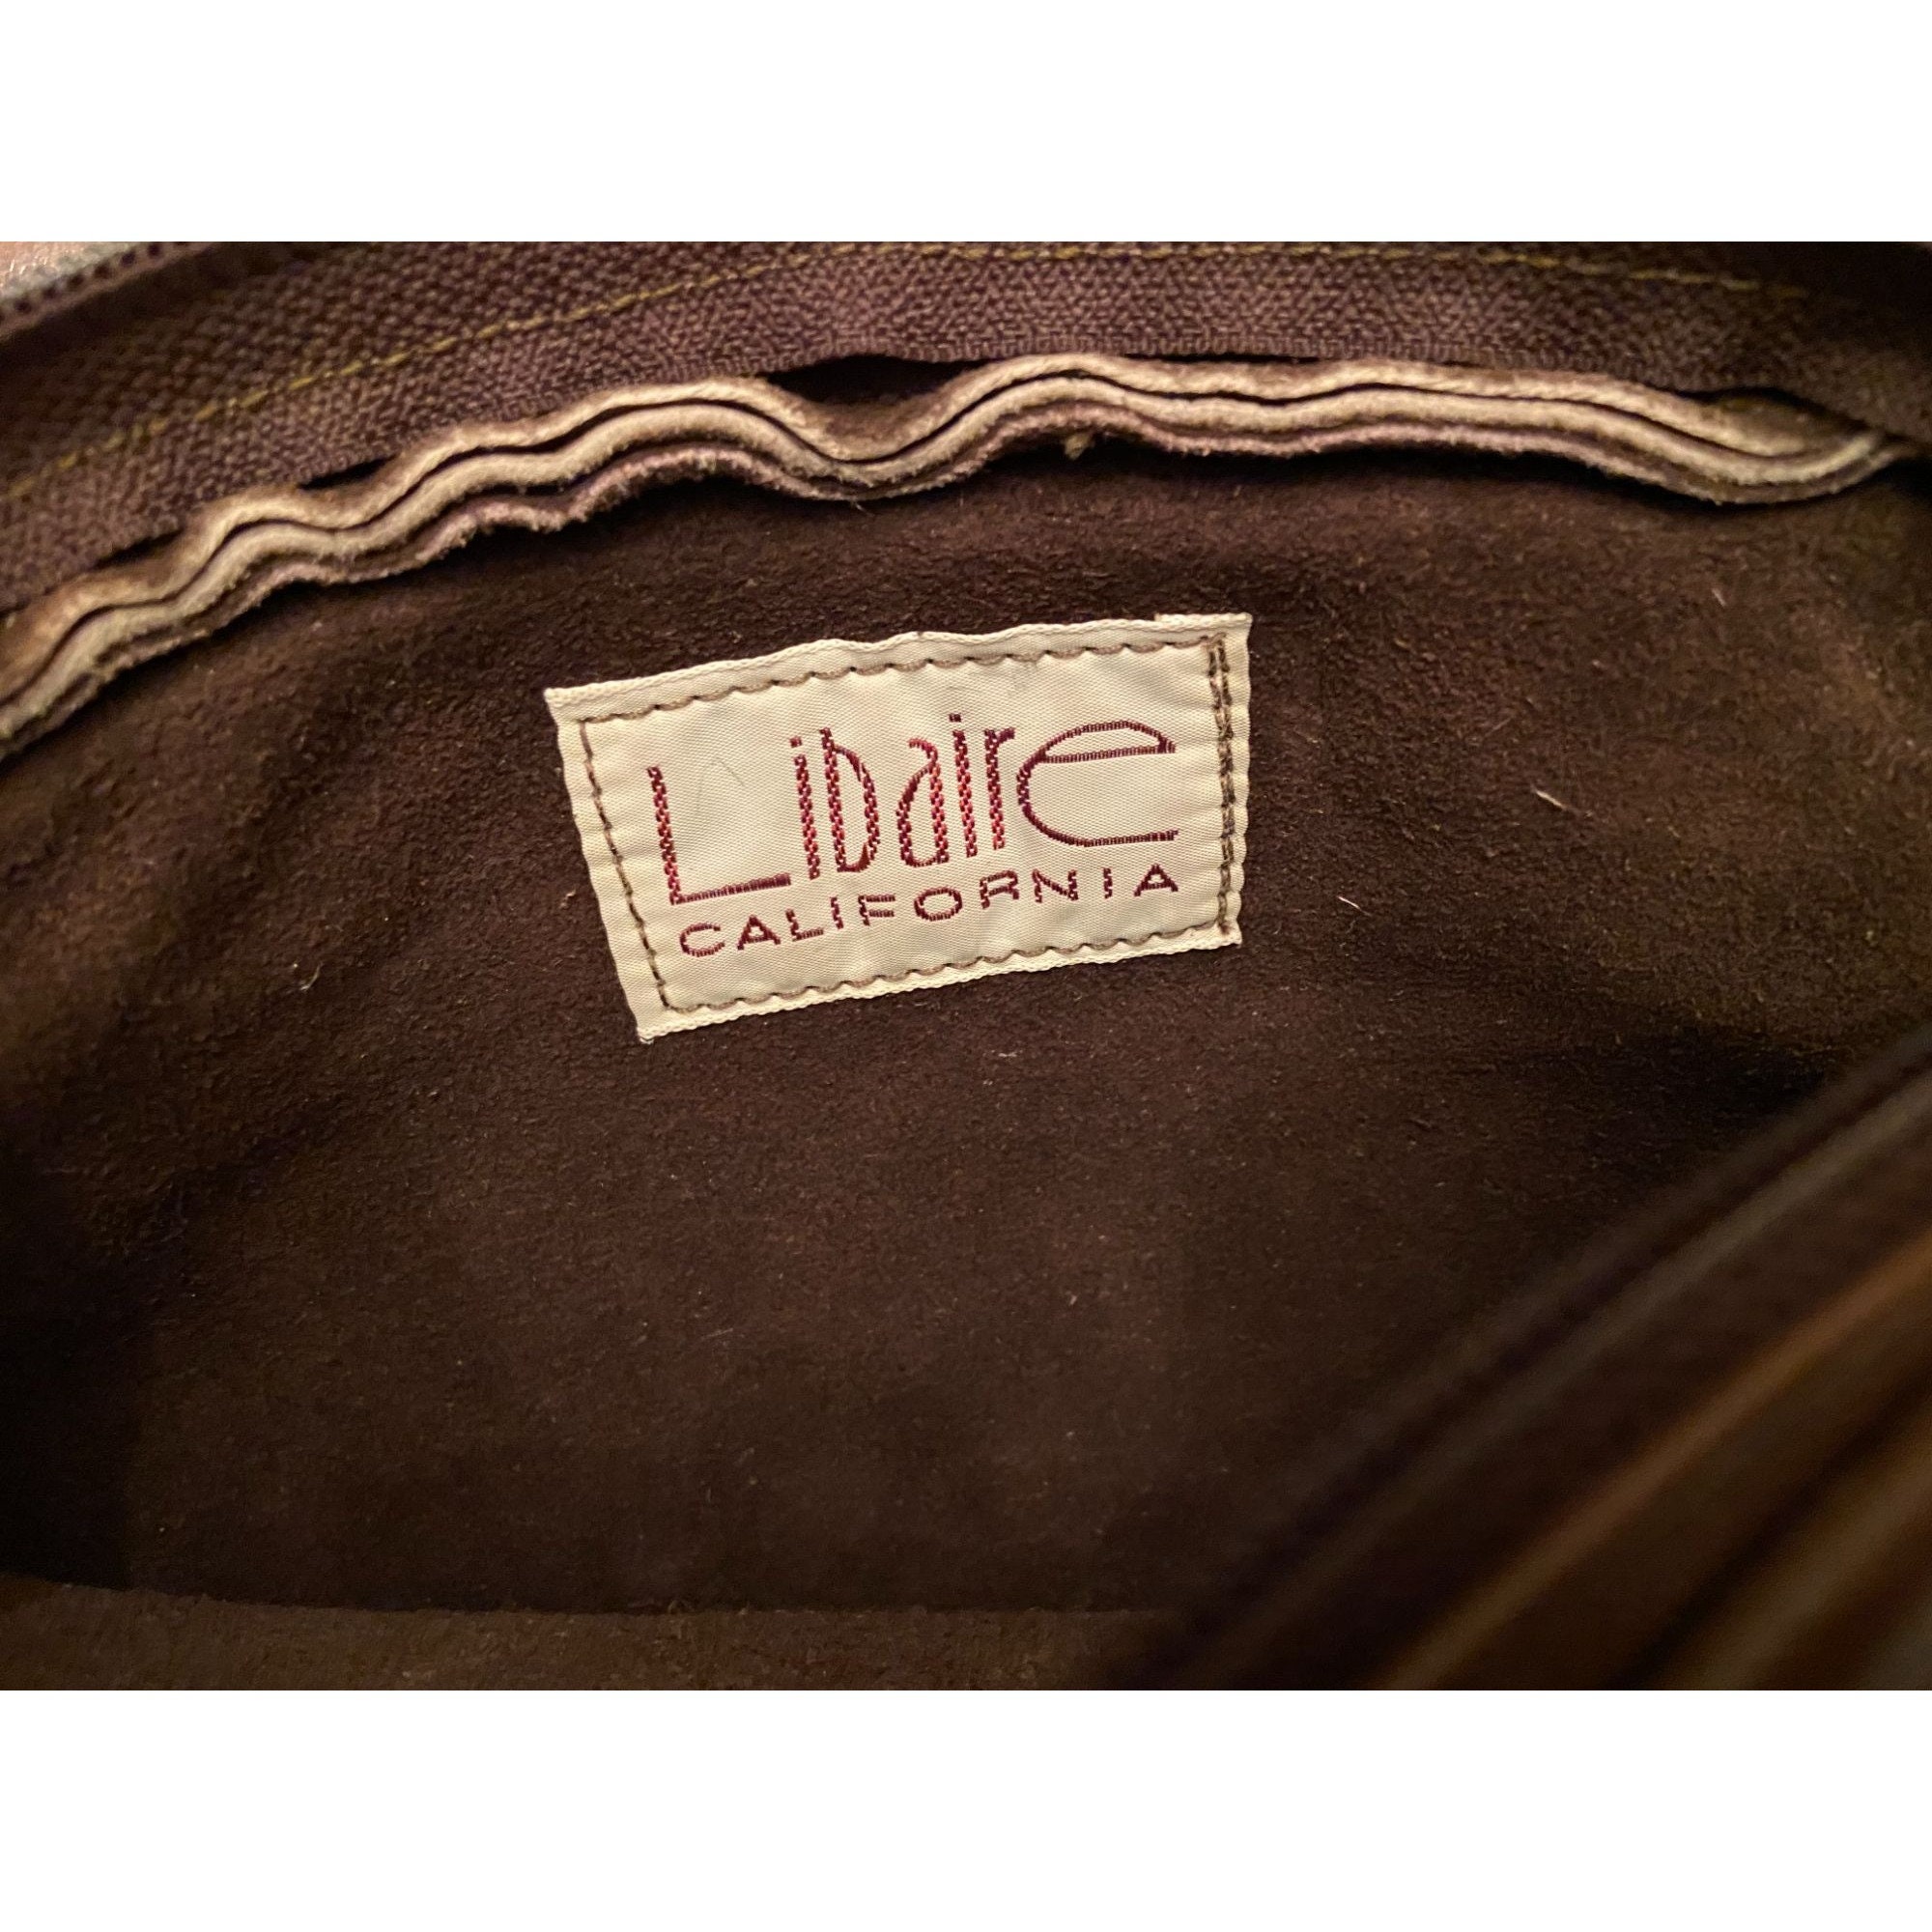 Libaire California Brown Leather Wrislet -  India